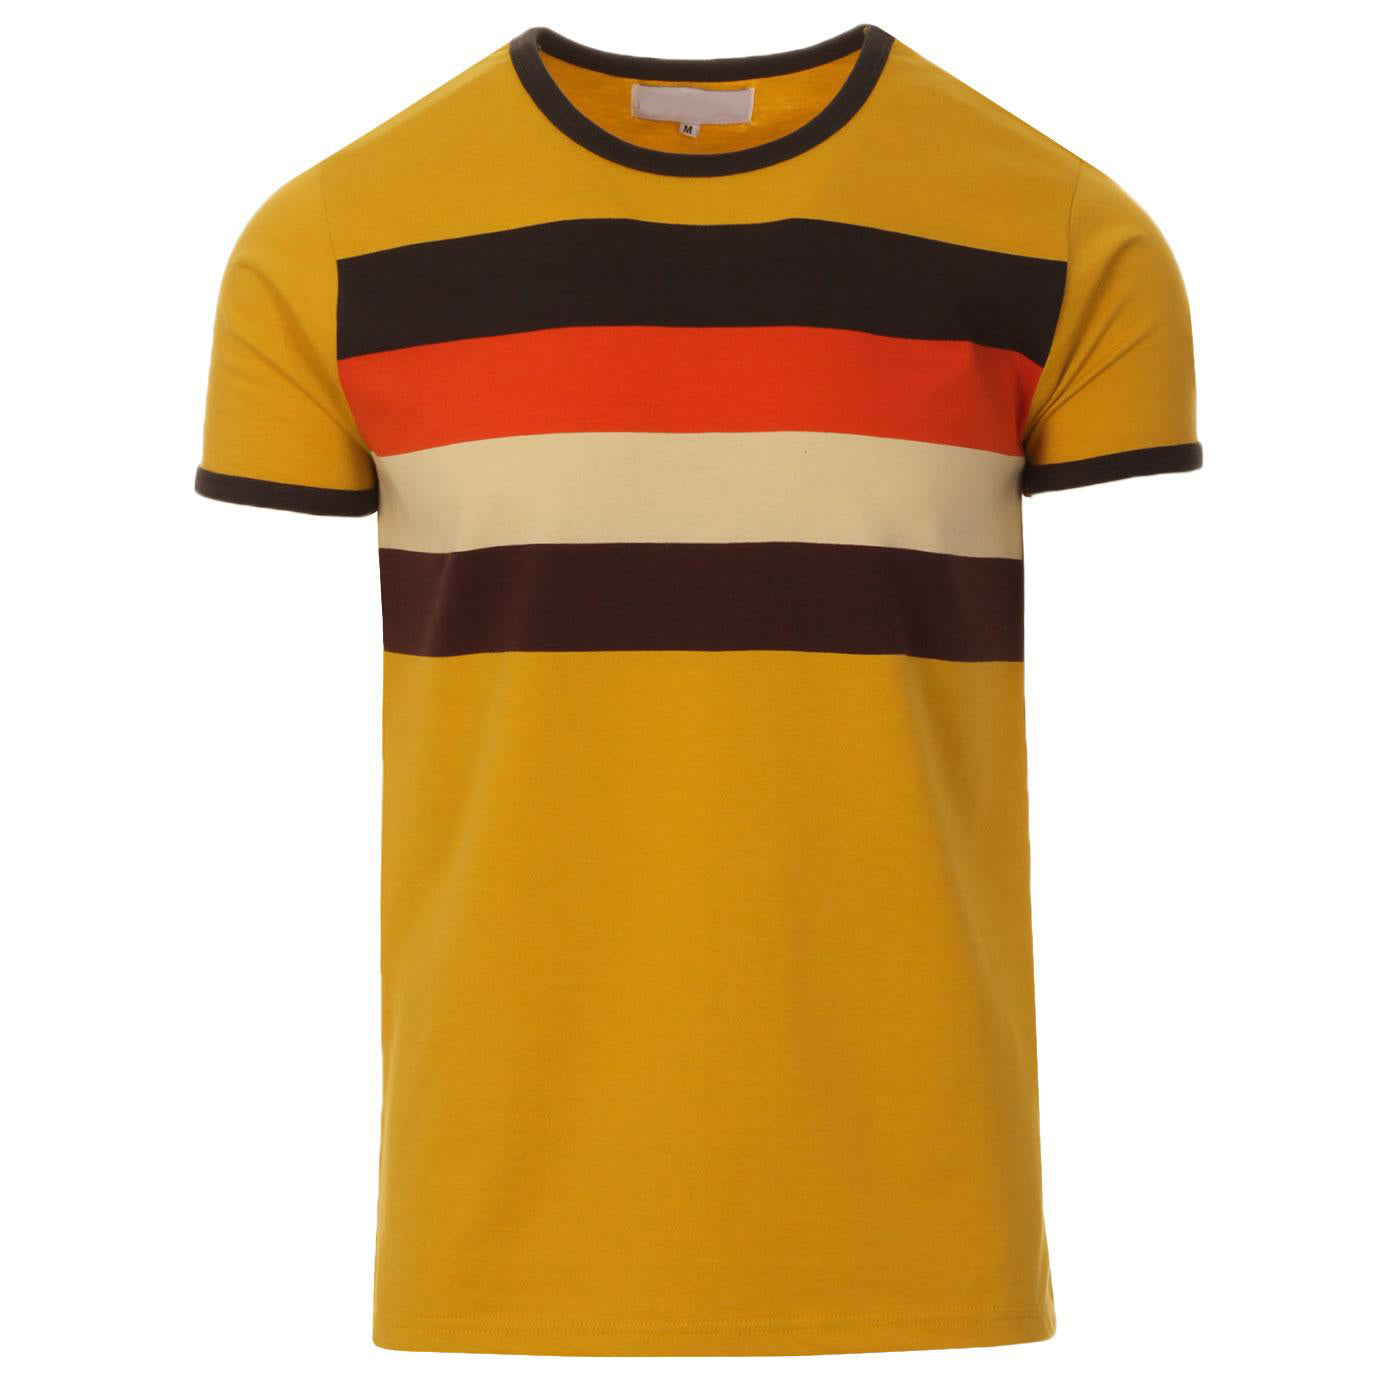 OXKNIT Men Vintage Clothing 1970s Mod Style Casual Chest Stripe Retro T-Shirt